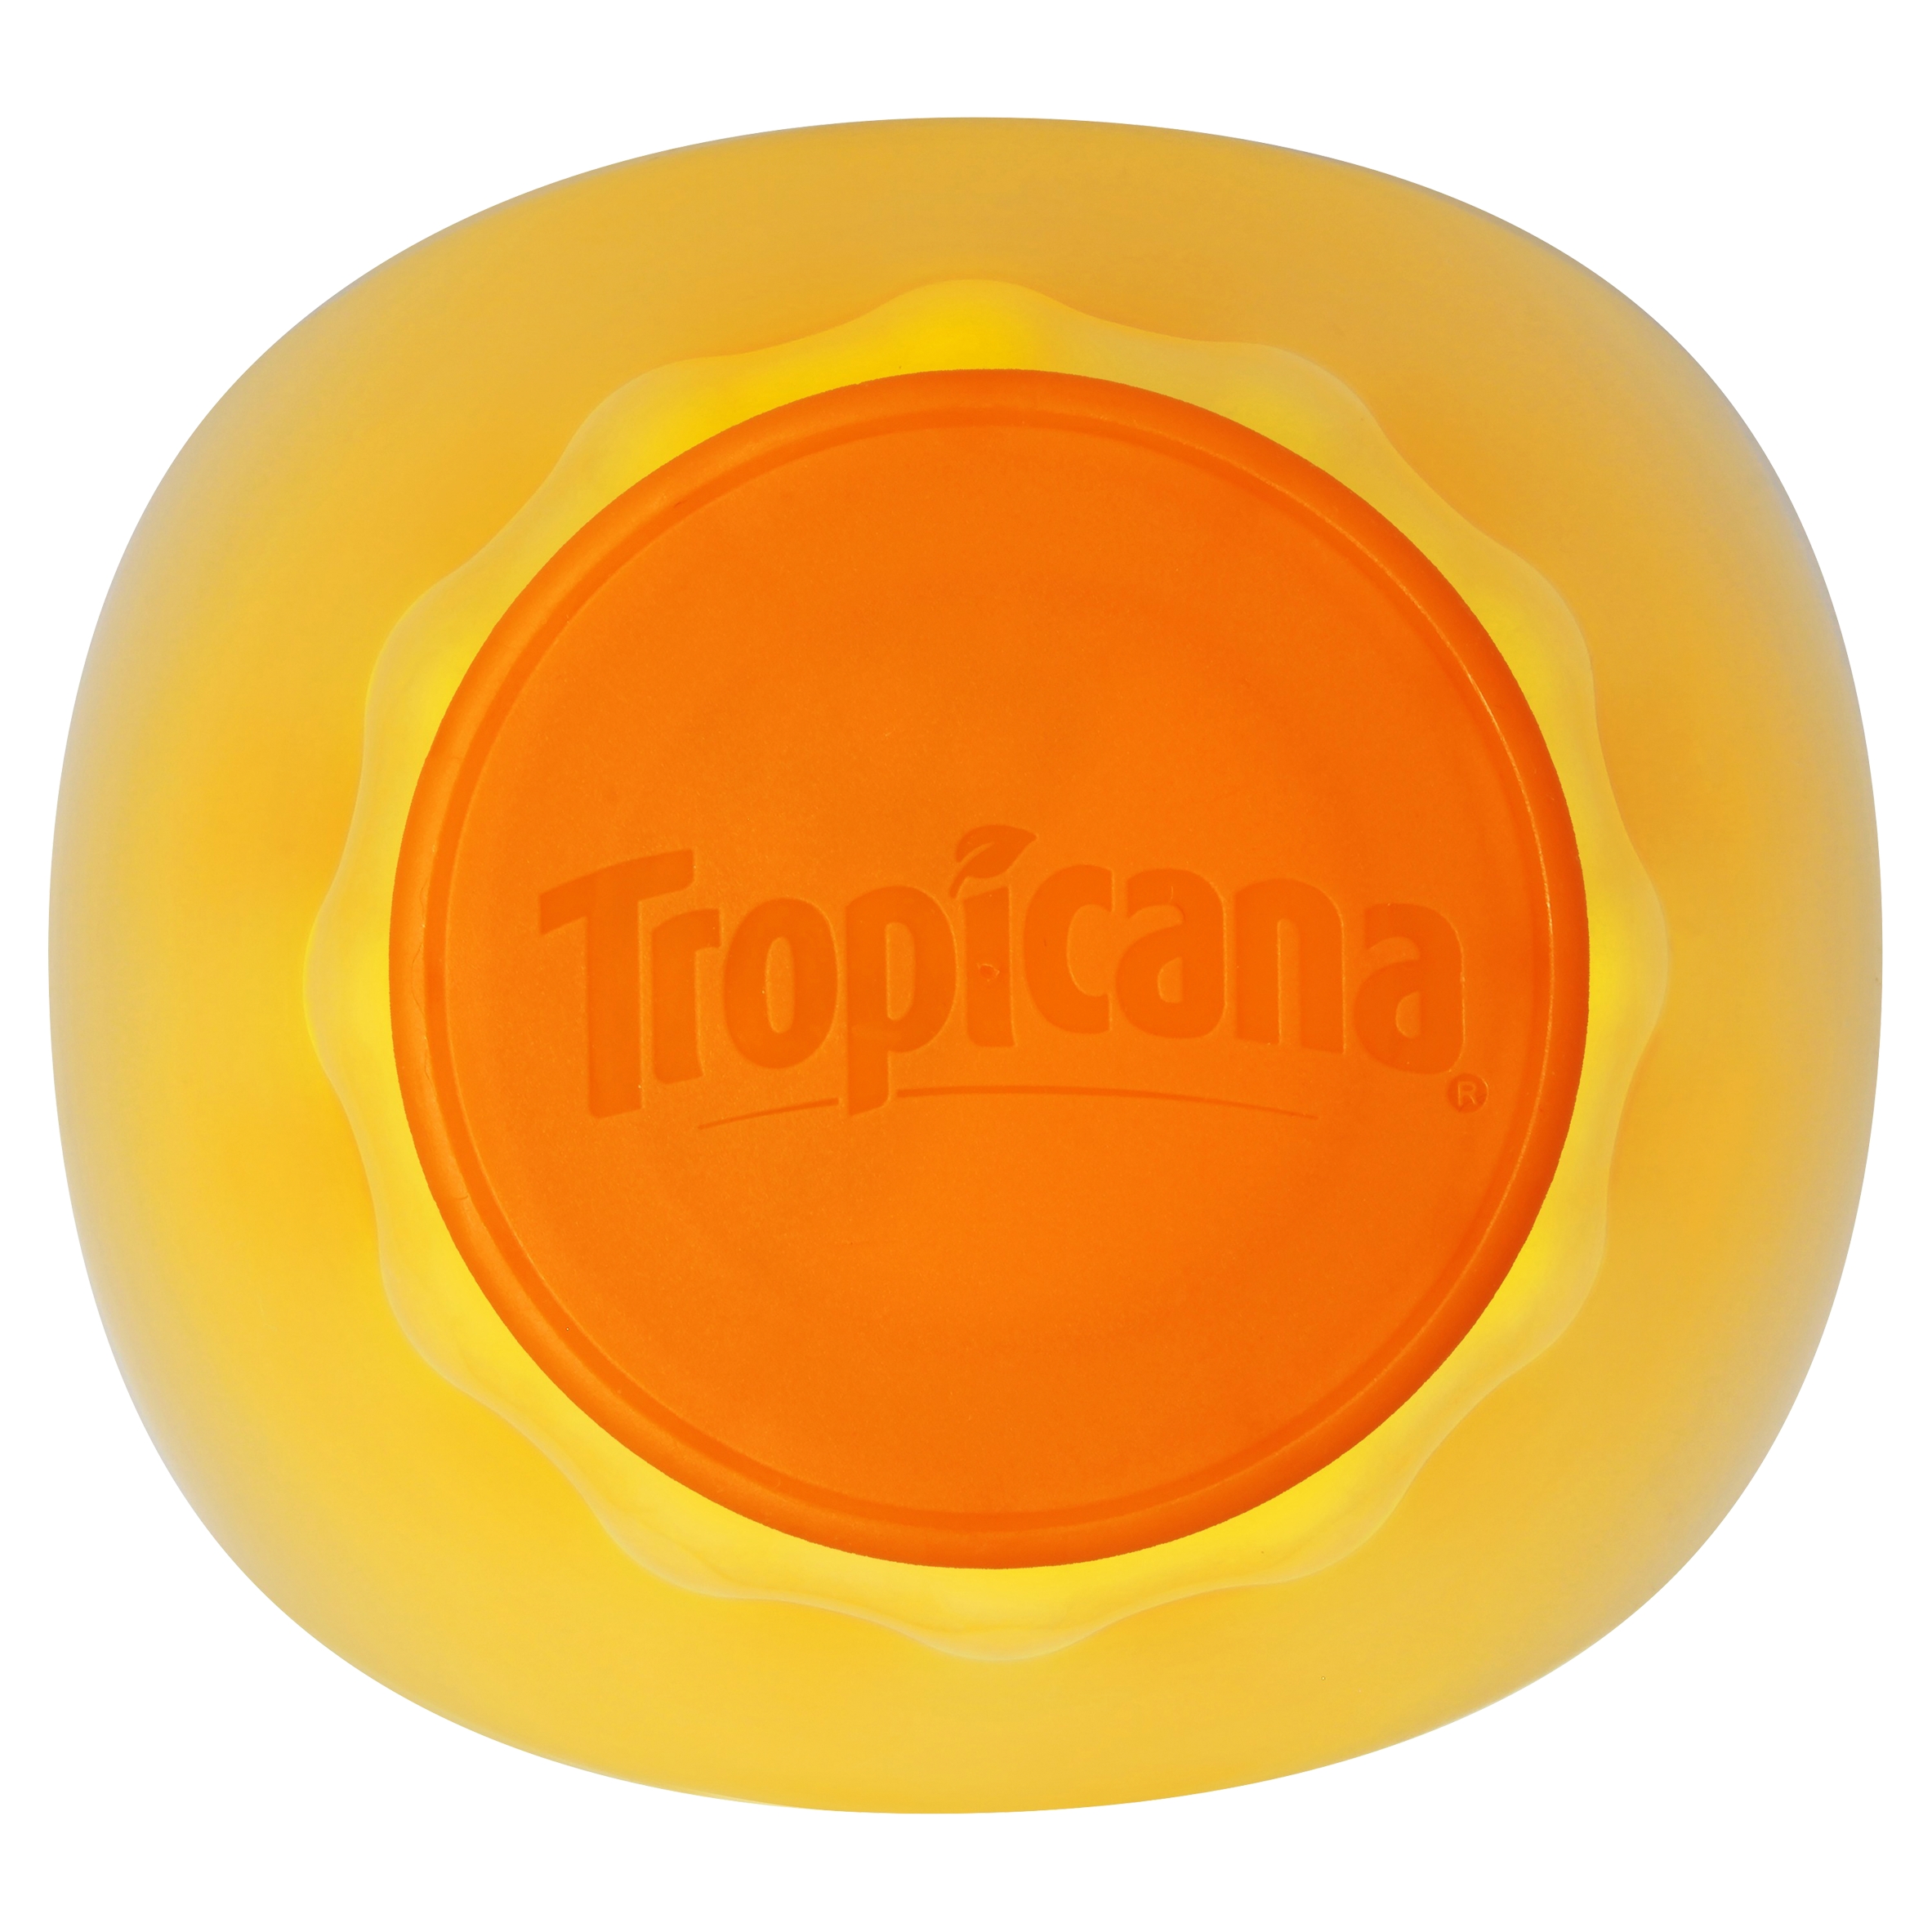 Tropicana Pure Premium Low Acid 100% Juice Orange No Pulp with Vitamins A and C 52 fl oz Bottle, Fruit Juice - image 3 of 9